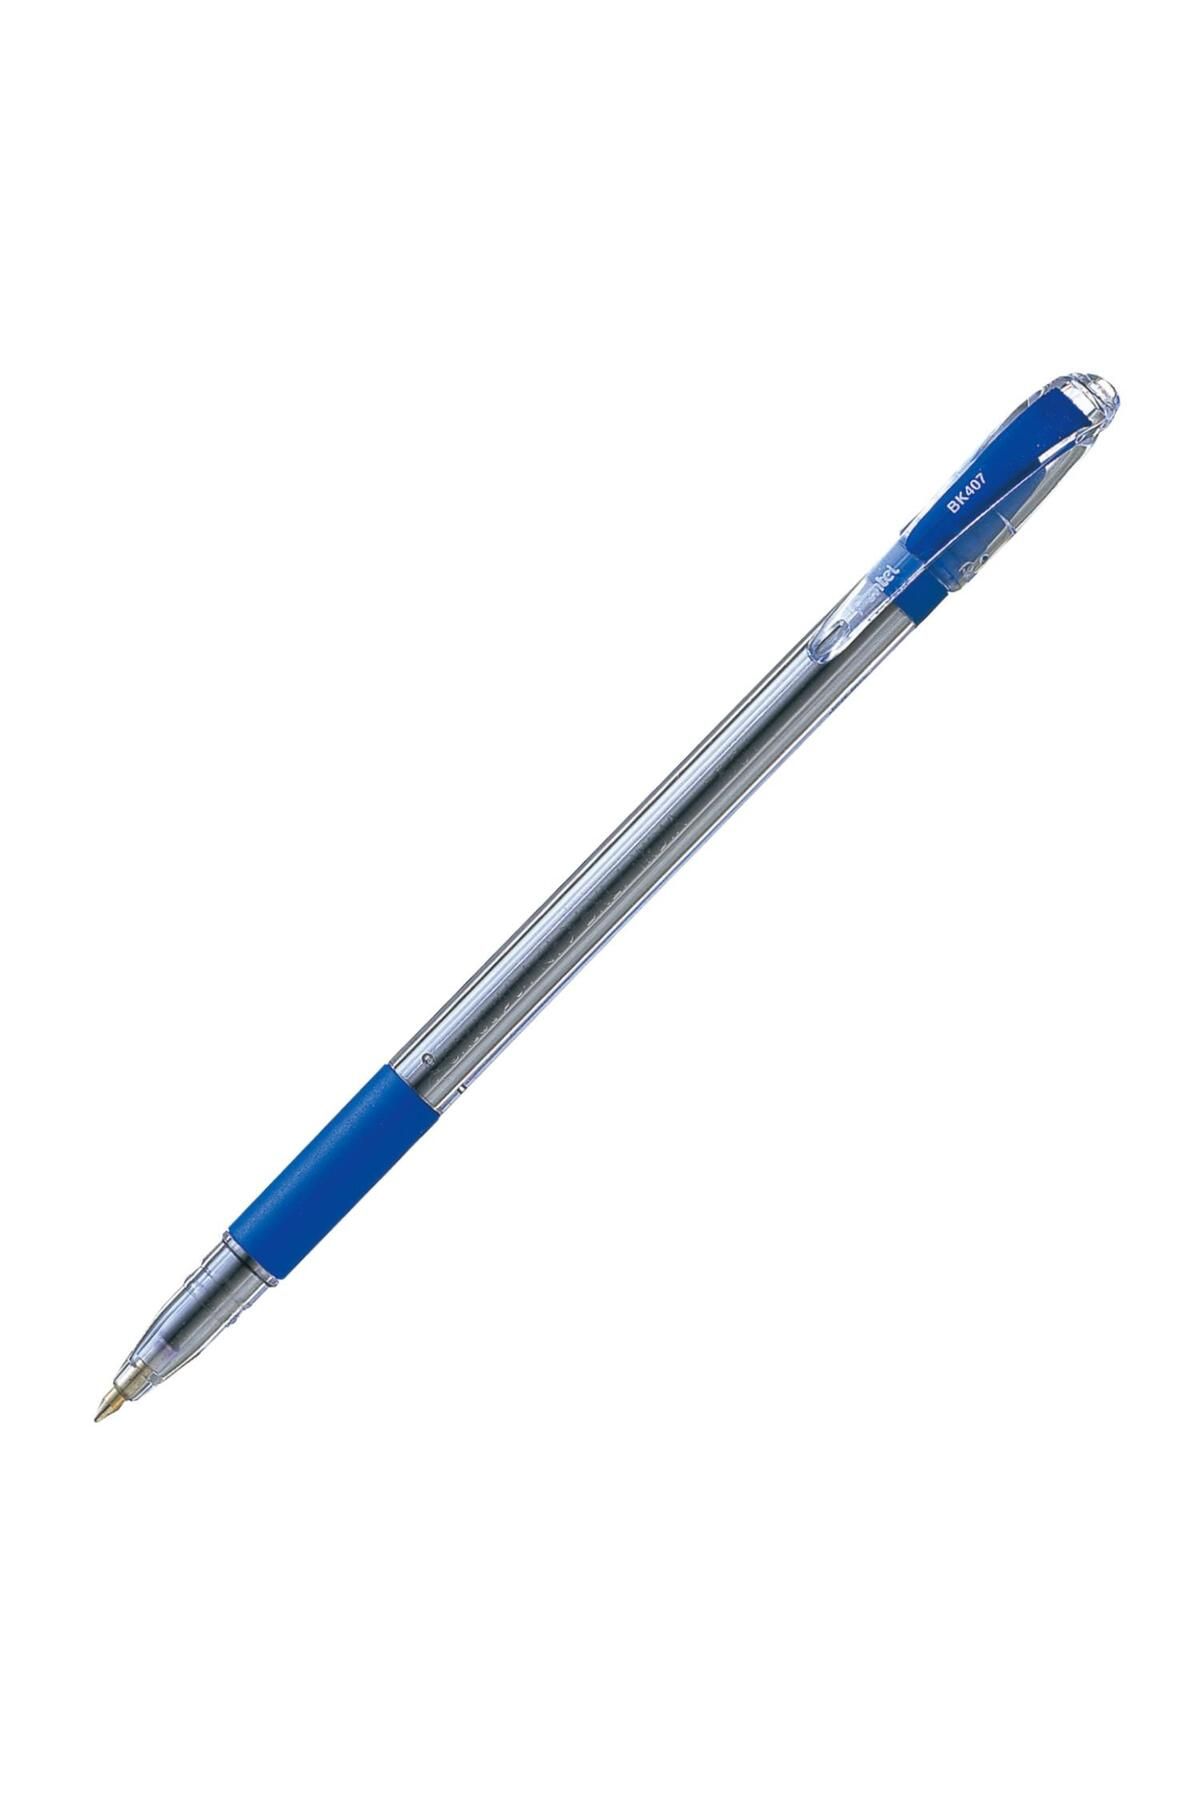 Pentel Tükenmez Kalem 0.7 mm Mavi BK407-C